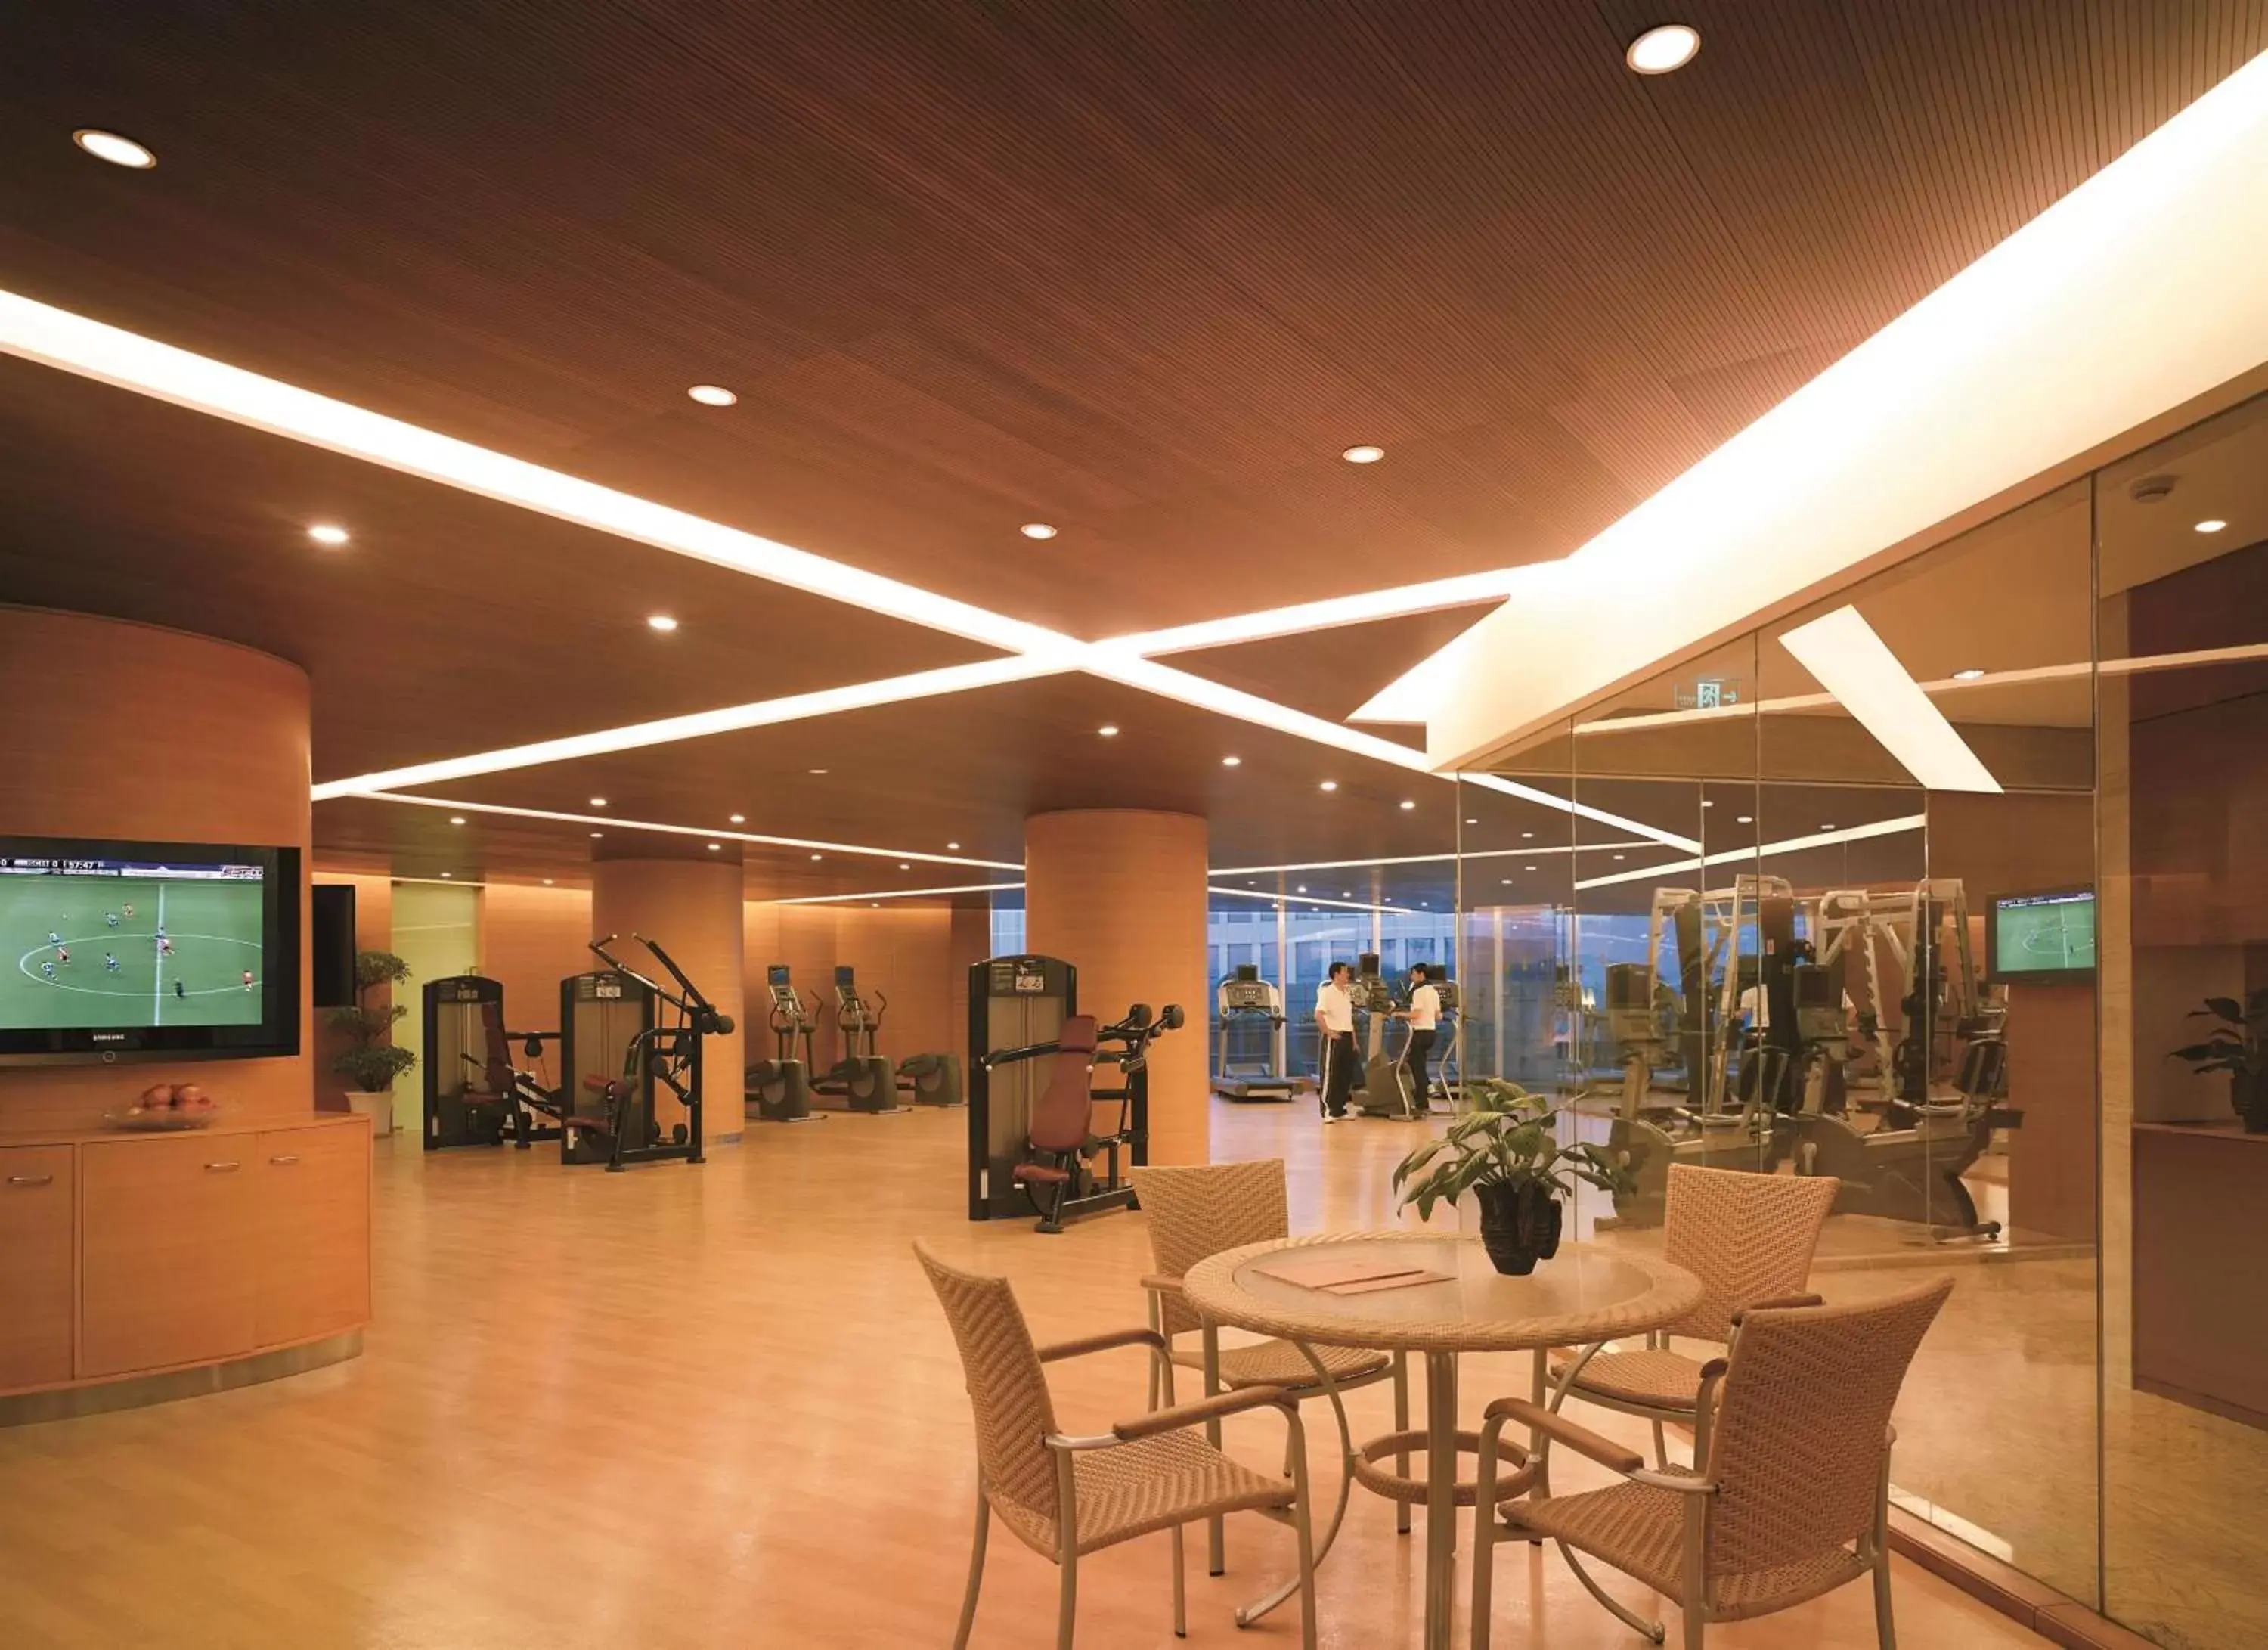 Fitness centre/facilities in Shangri-La Chengdu